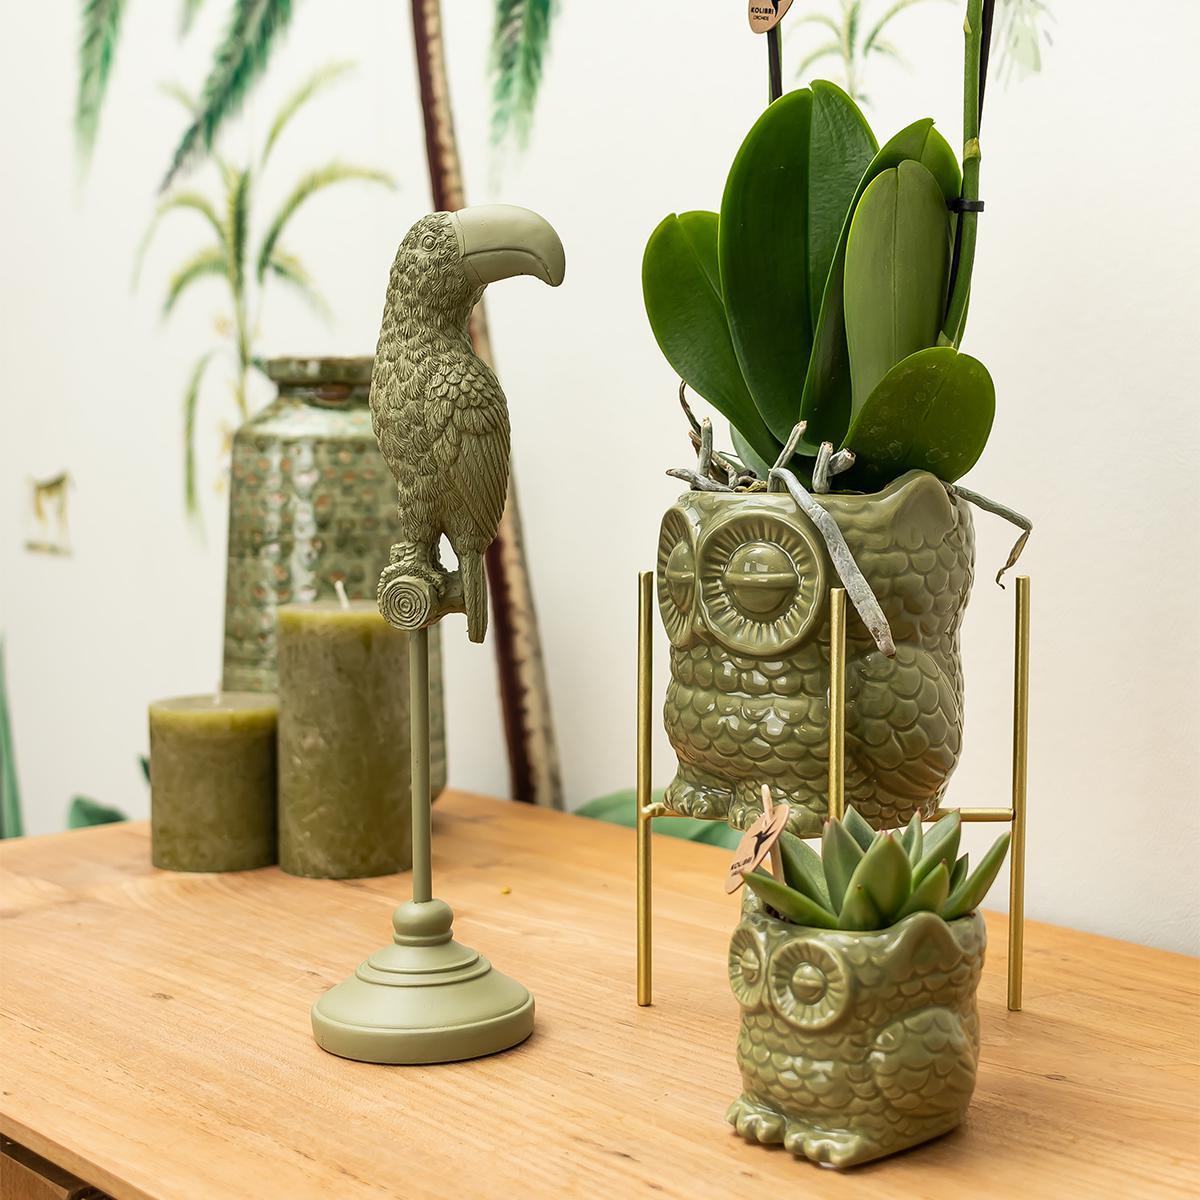 Kolibri Home | Owl bloempot - Groene keramieken sierpot - potmaat Ø6cm